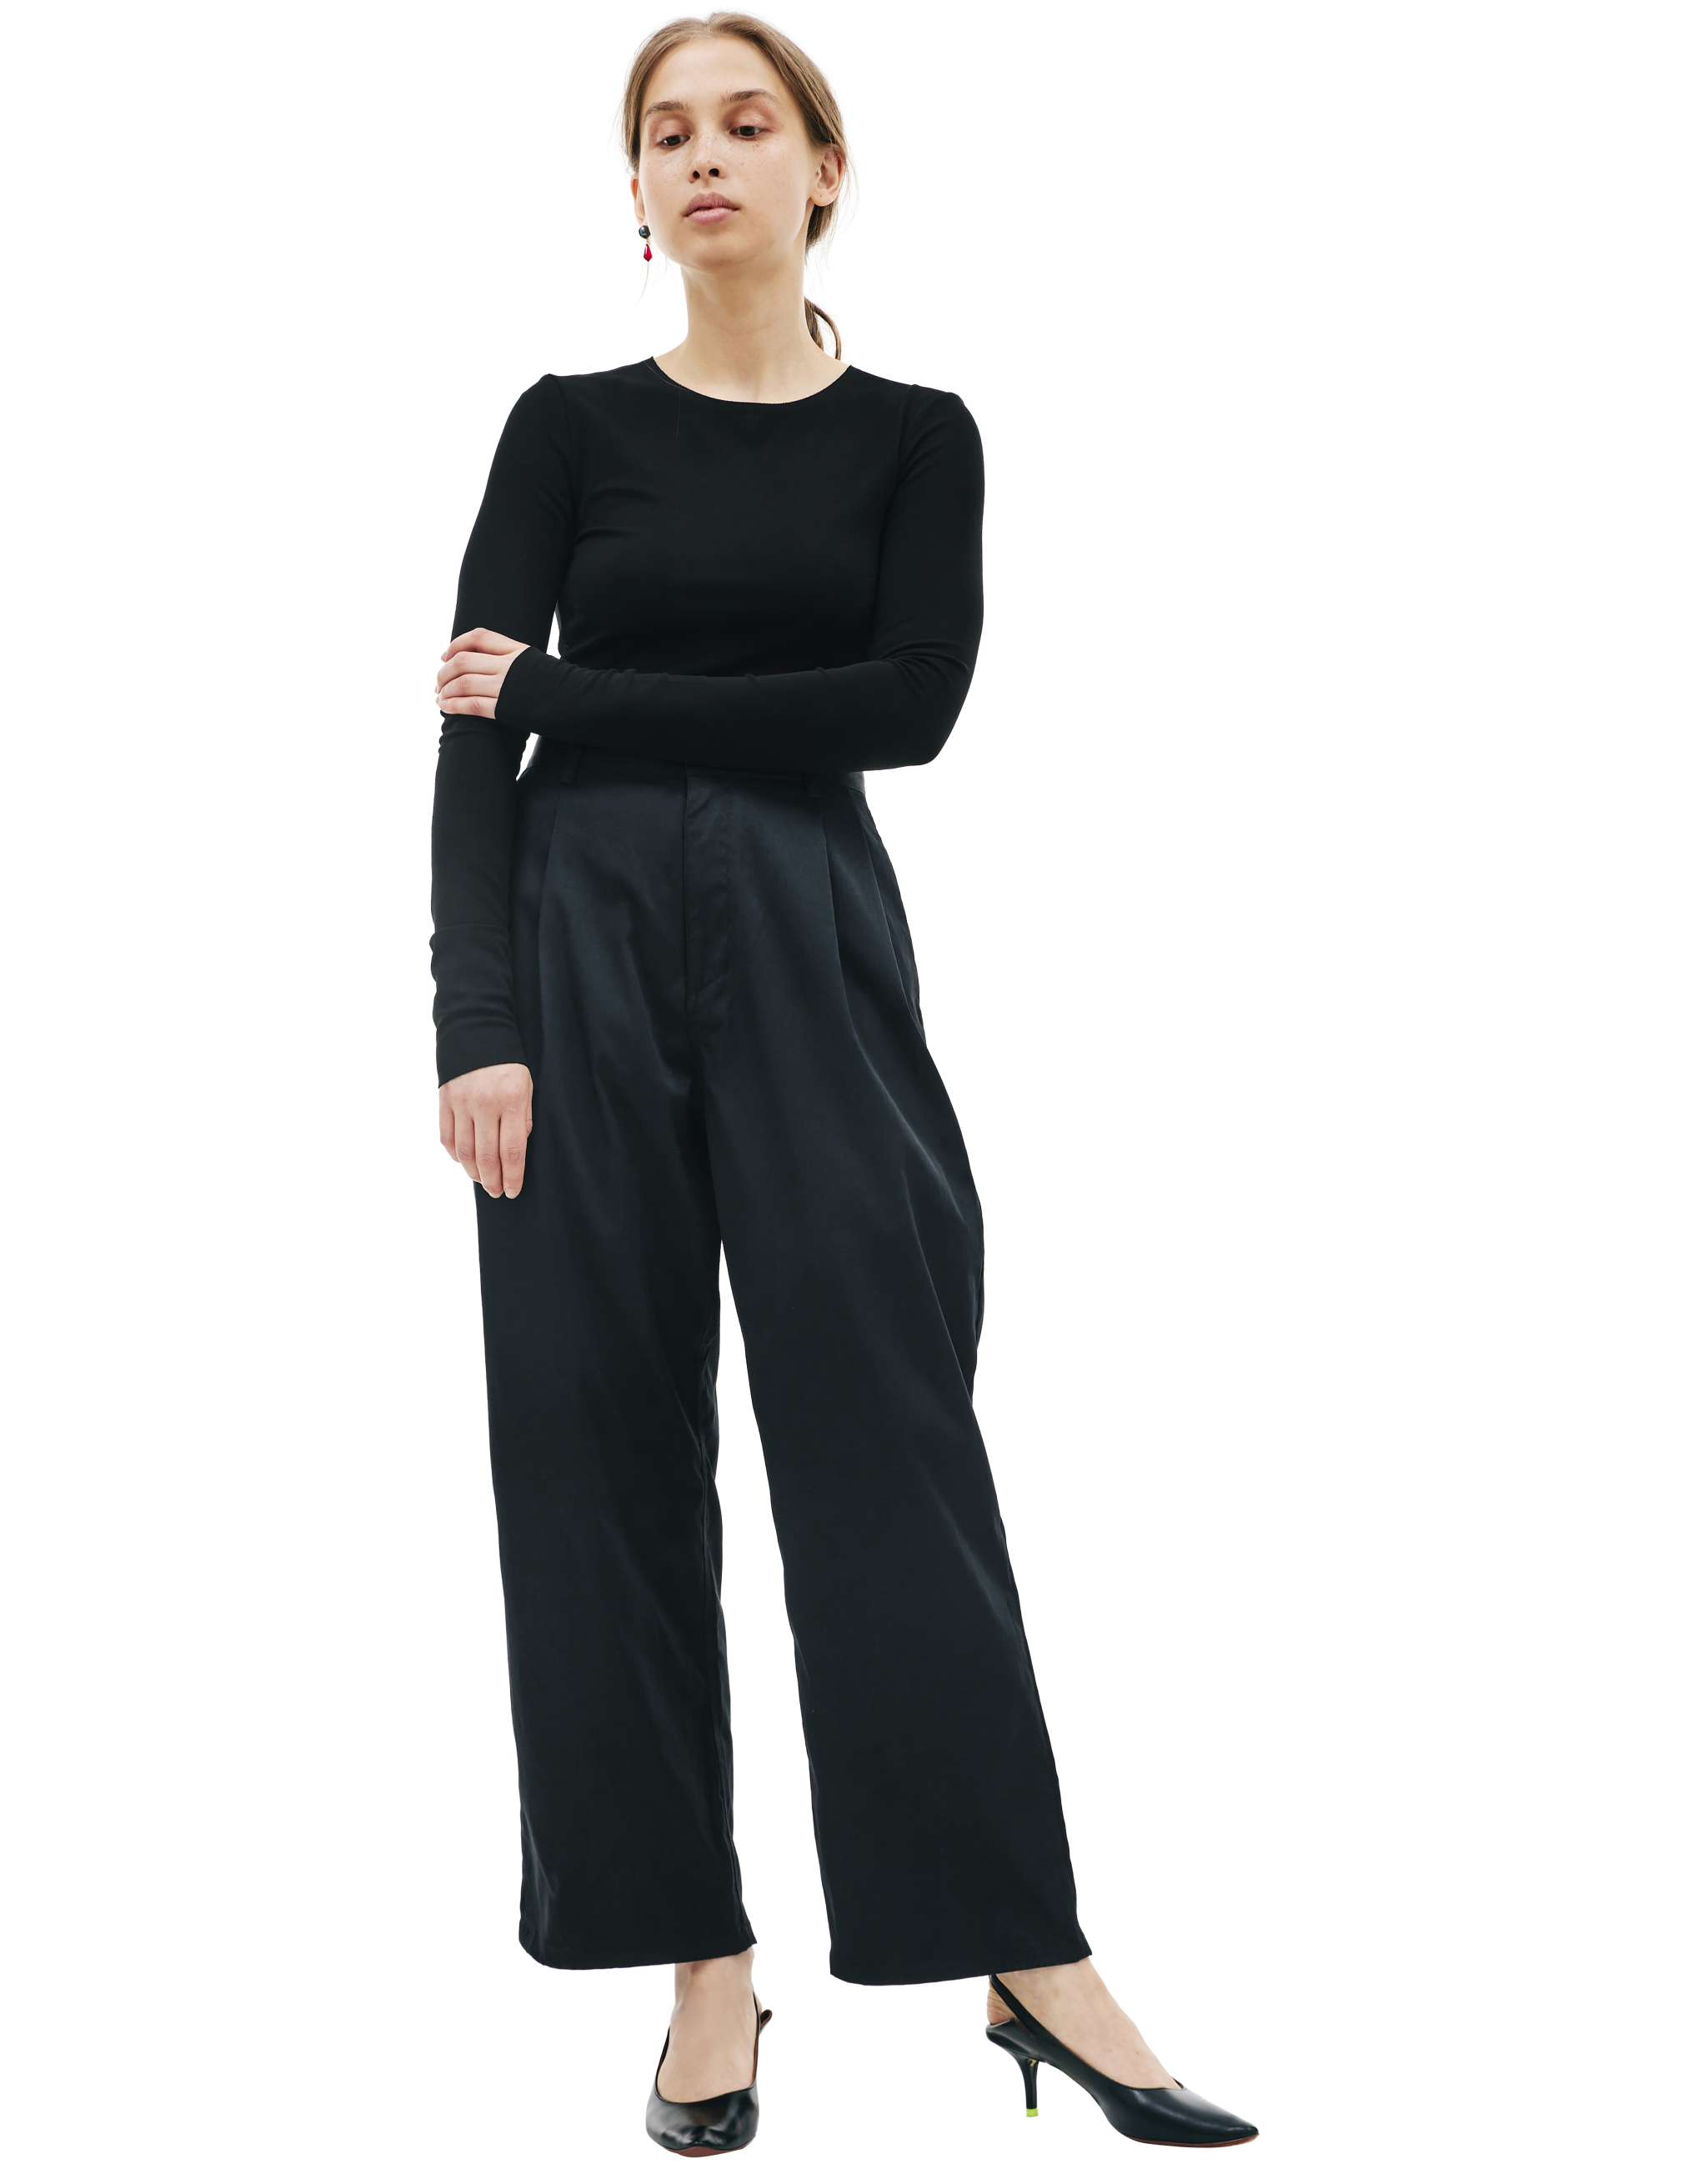 Черные брюки с защипами KIMMY SS23-11/BLACK, размер M;L SS23-11/BLACK - фото 1